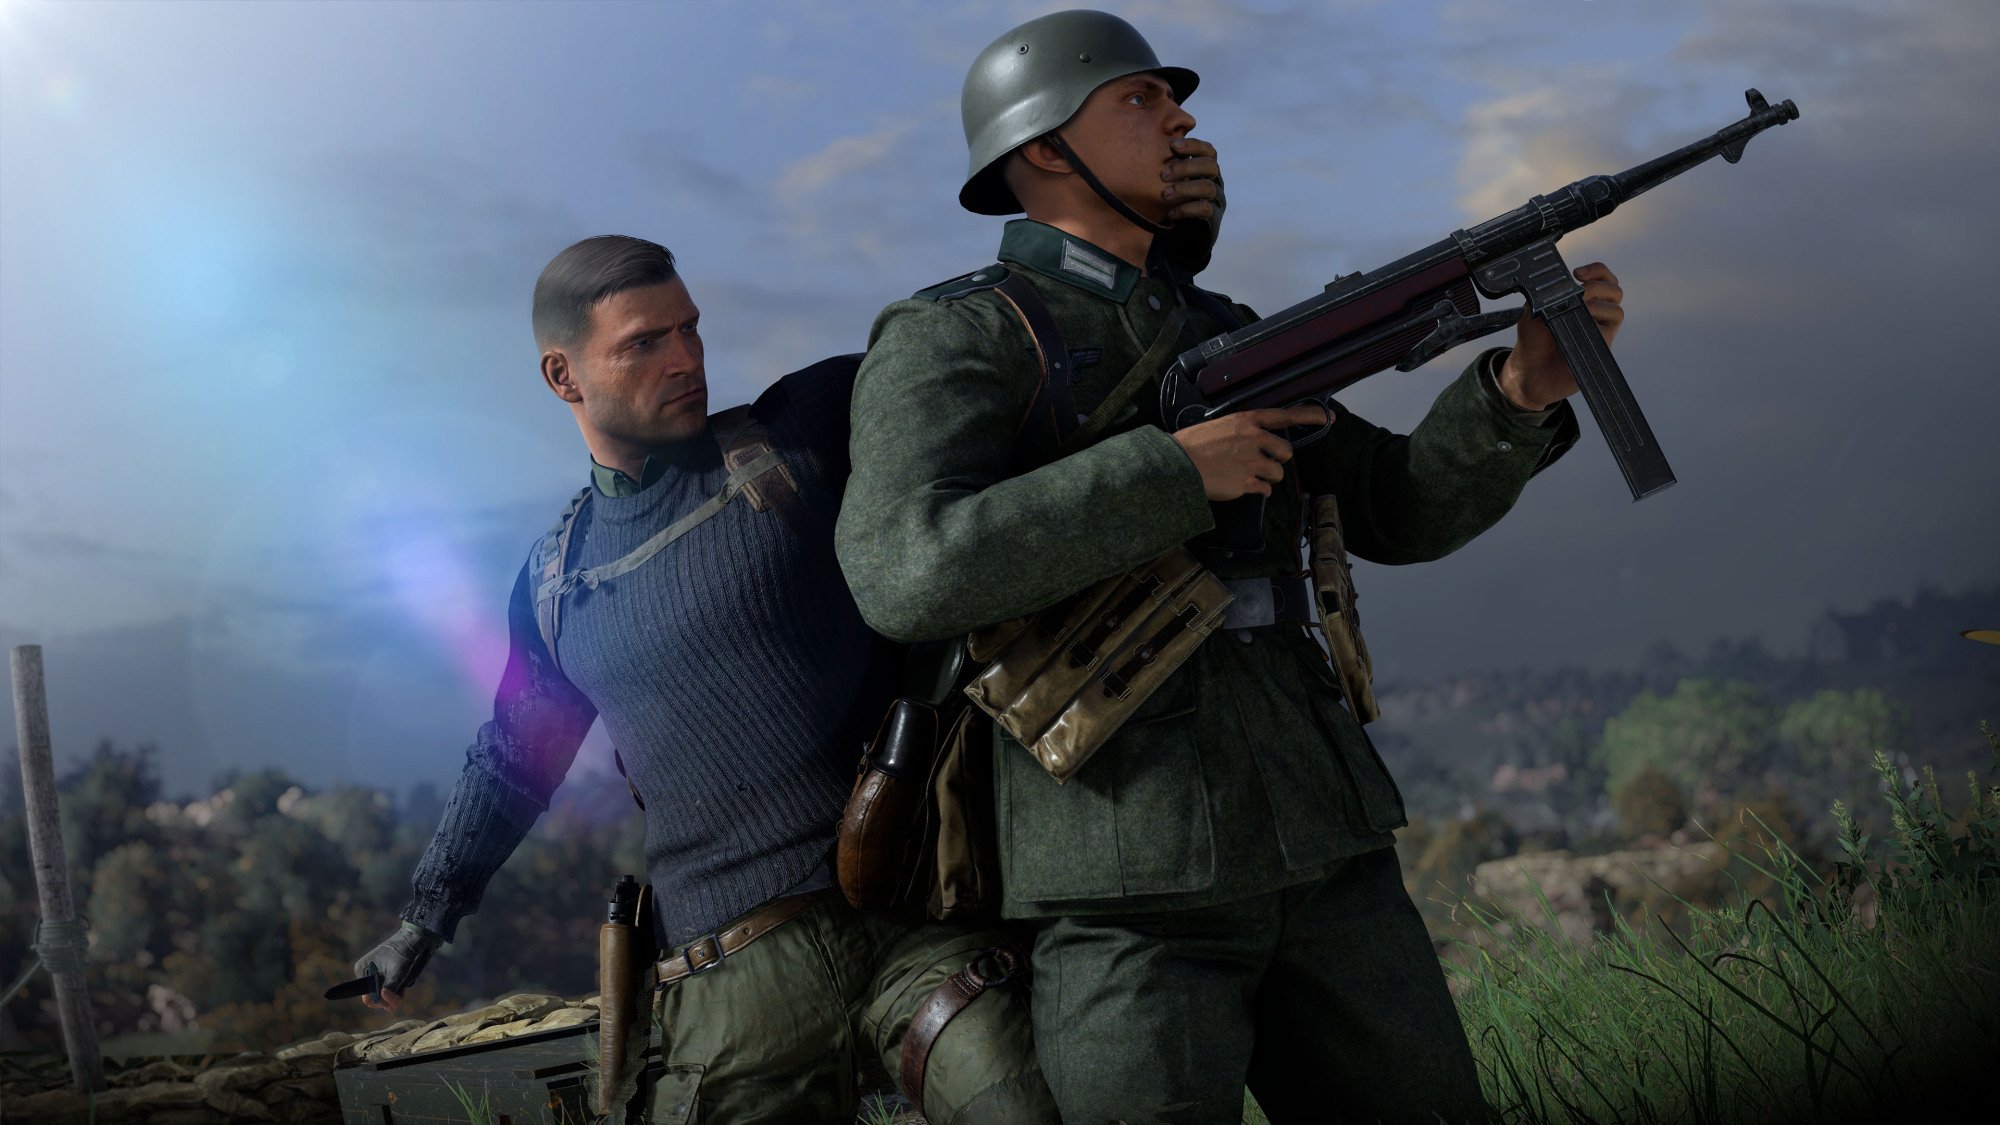 A screenshot from "Sniper Elite 5." Karl Fairburne prepares to stab a Nazi in the back.